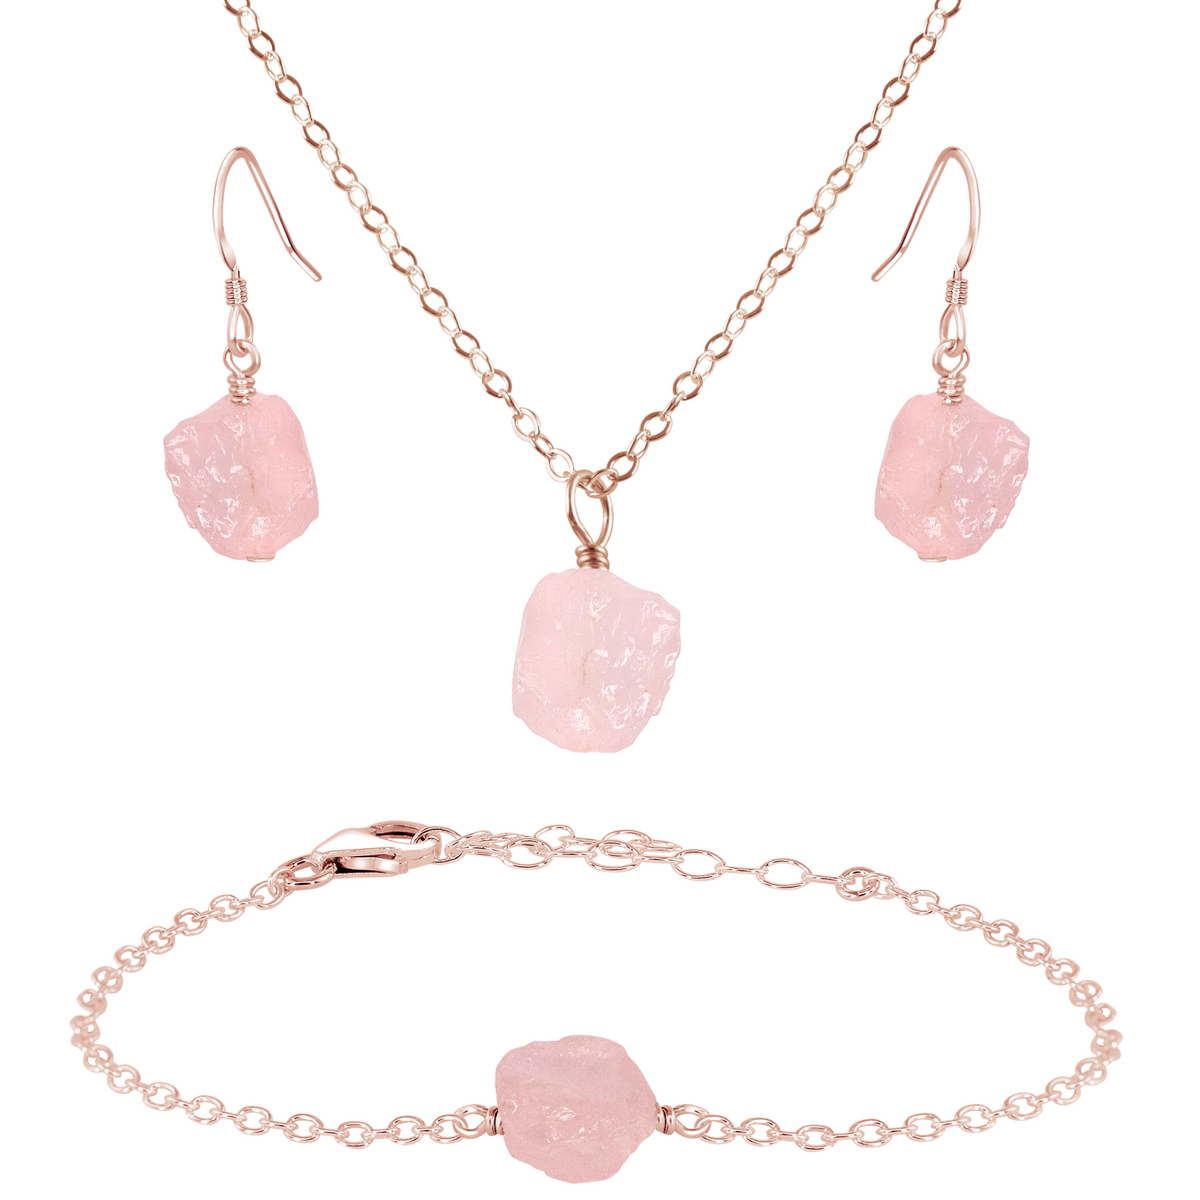 Raw Rose Quartz Crystal Earrings, Necklace & Bracelet Set